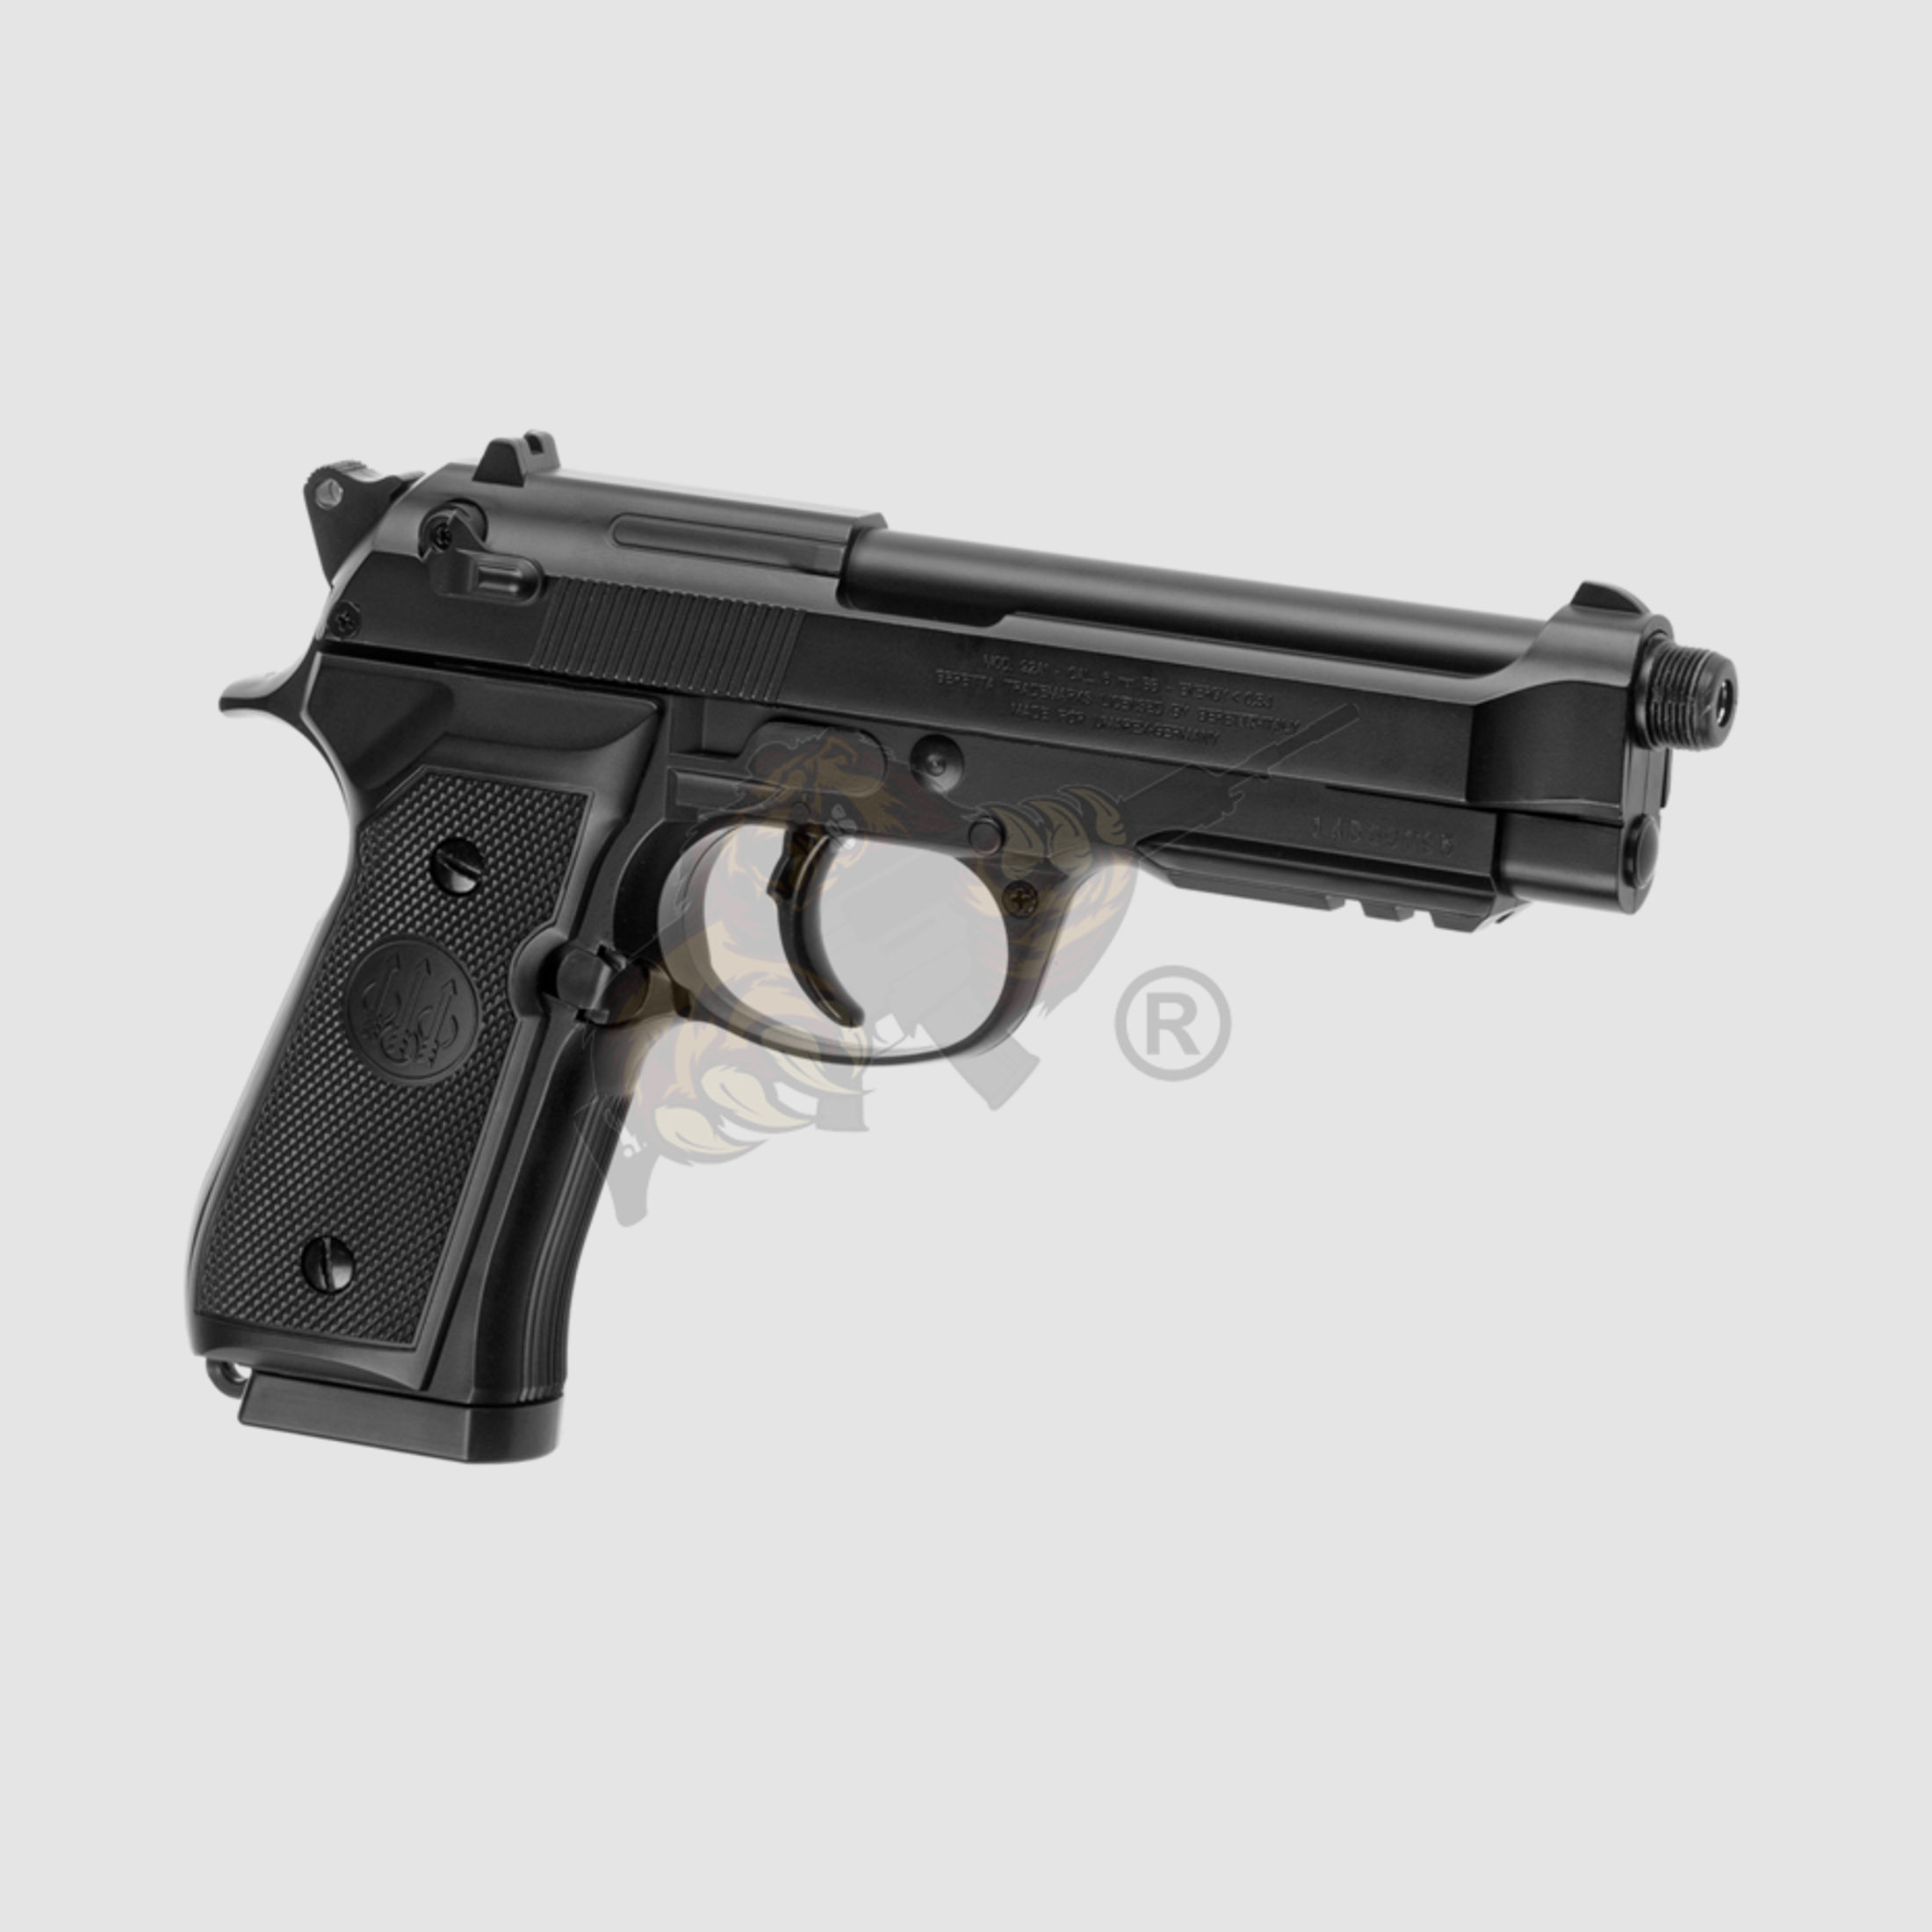 M92 FS A1 Metall Version AEP (Beretta) -  Airsoft Pistole - max 0,5 Joule